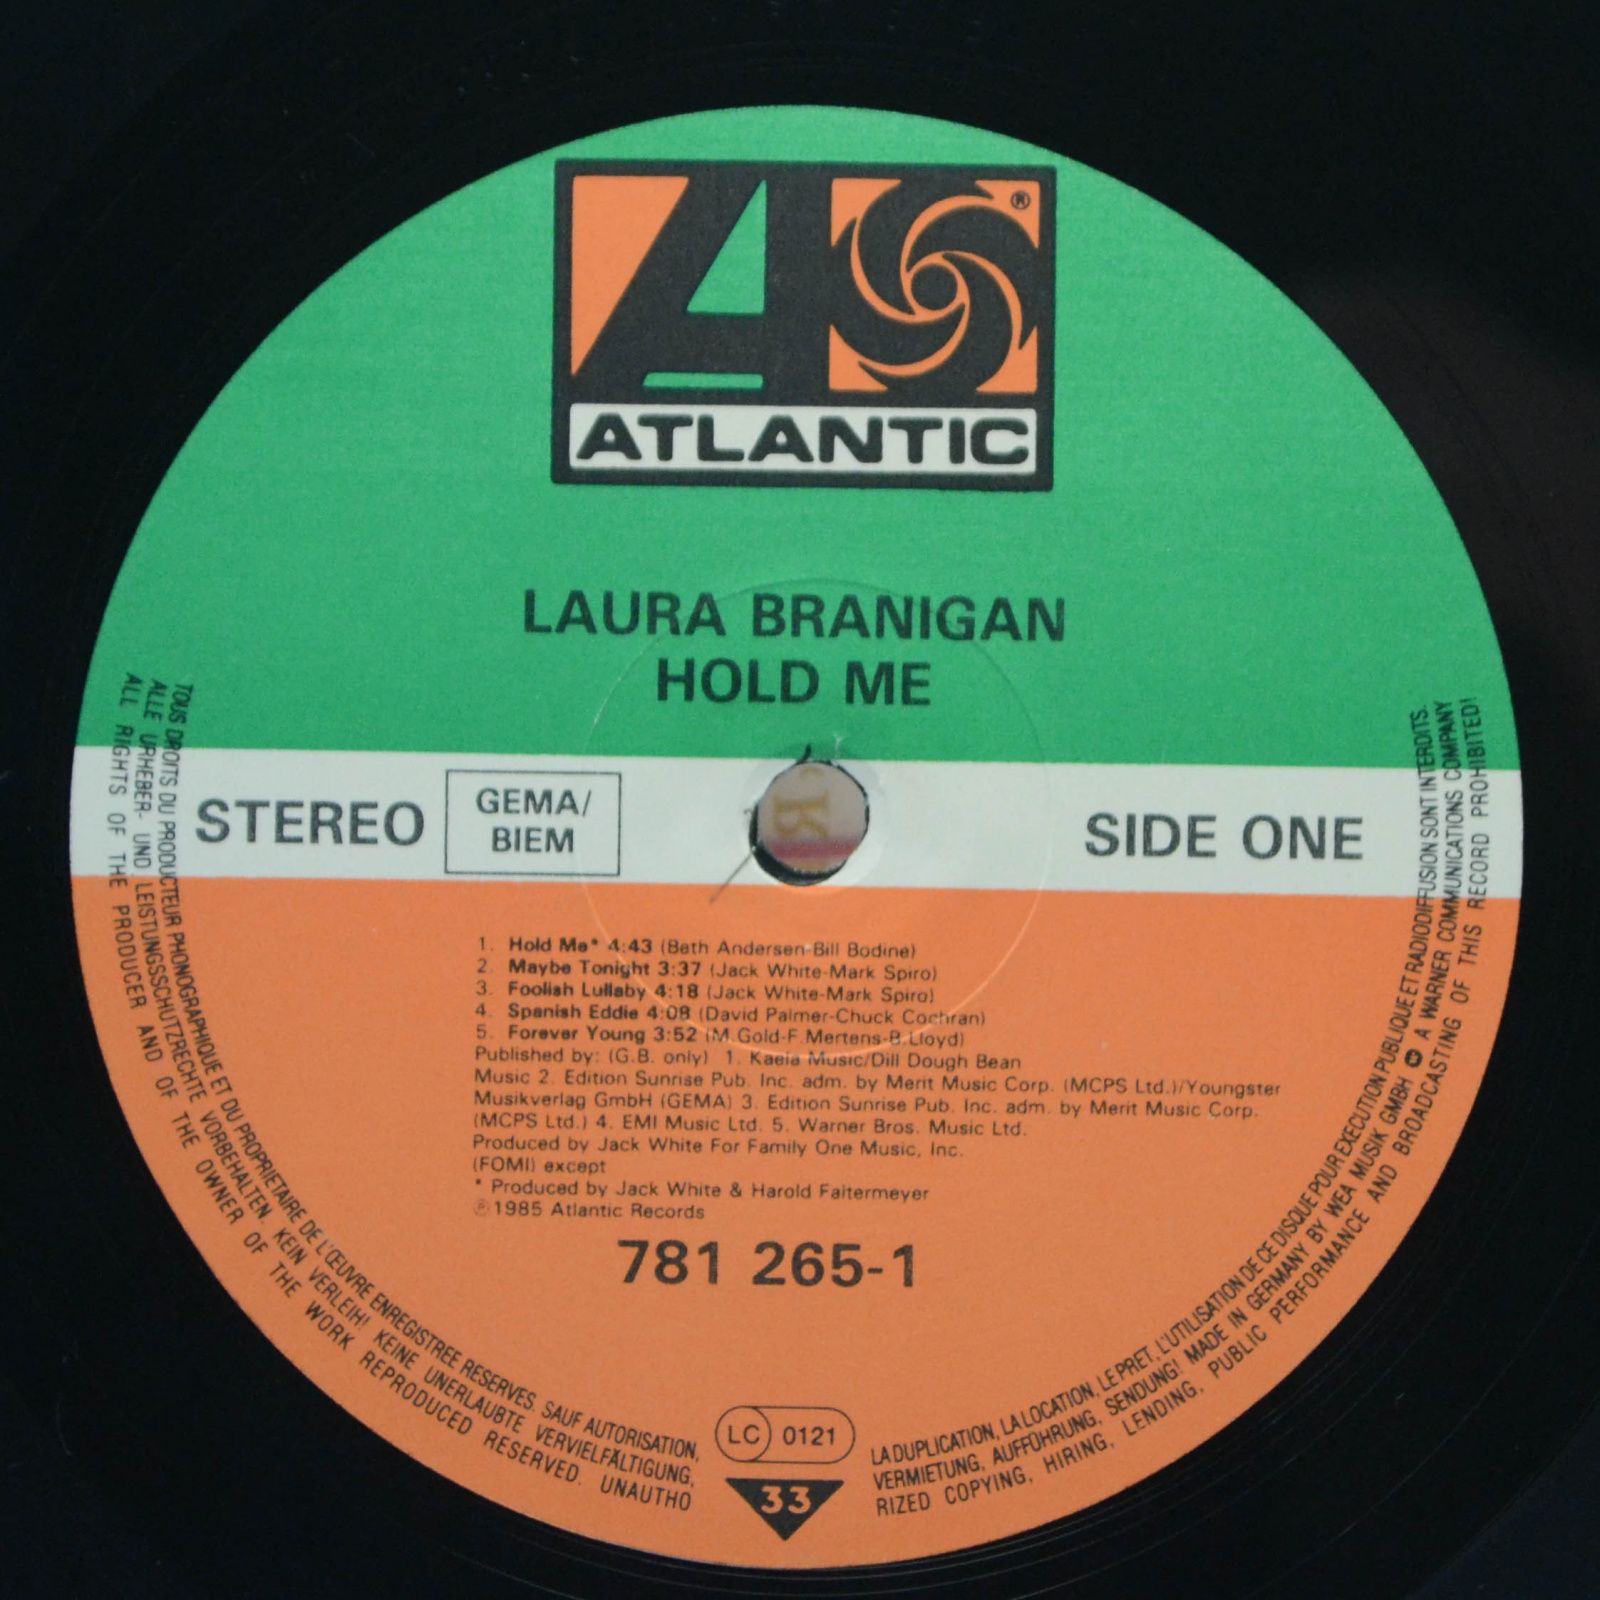 Laura Branigan — Hold Me, 1985